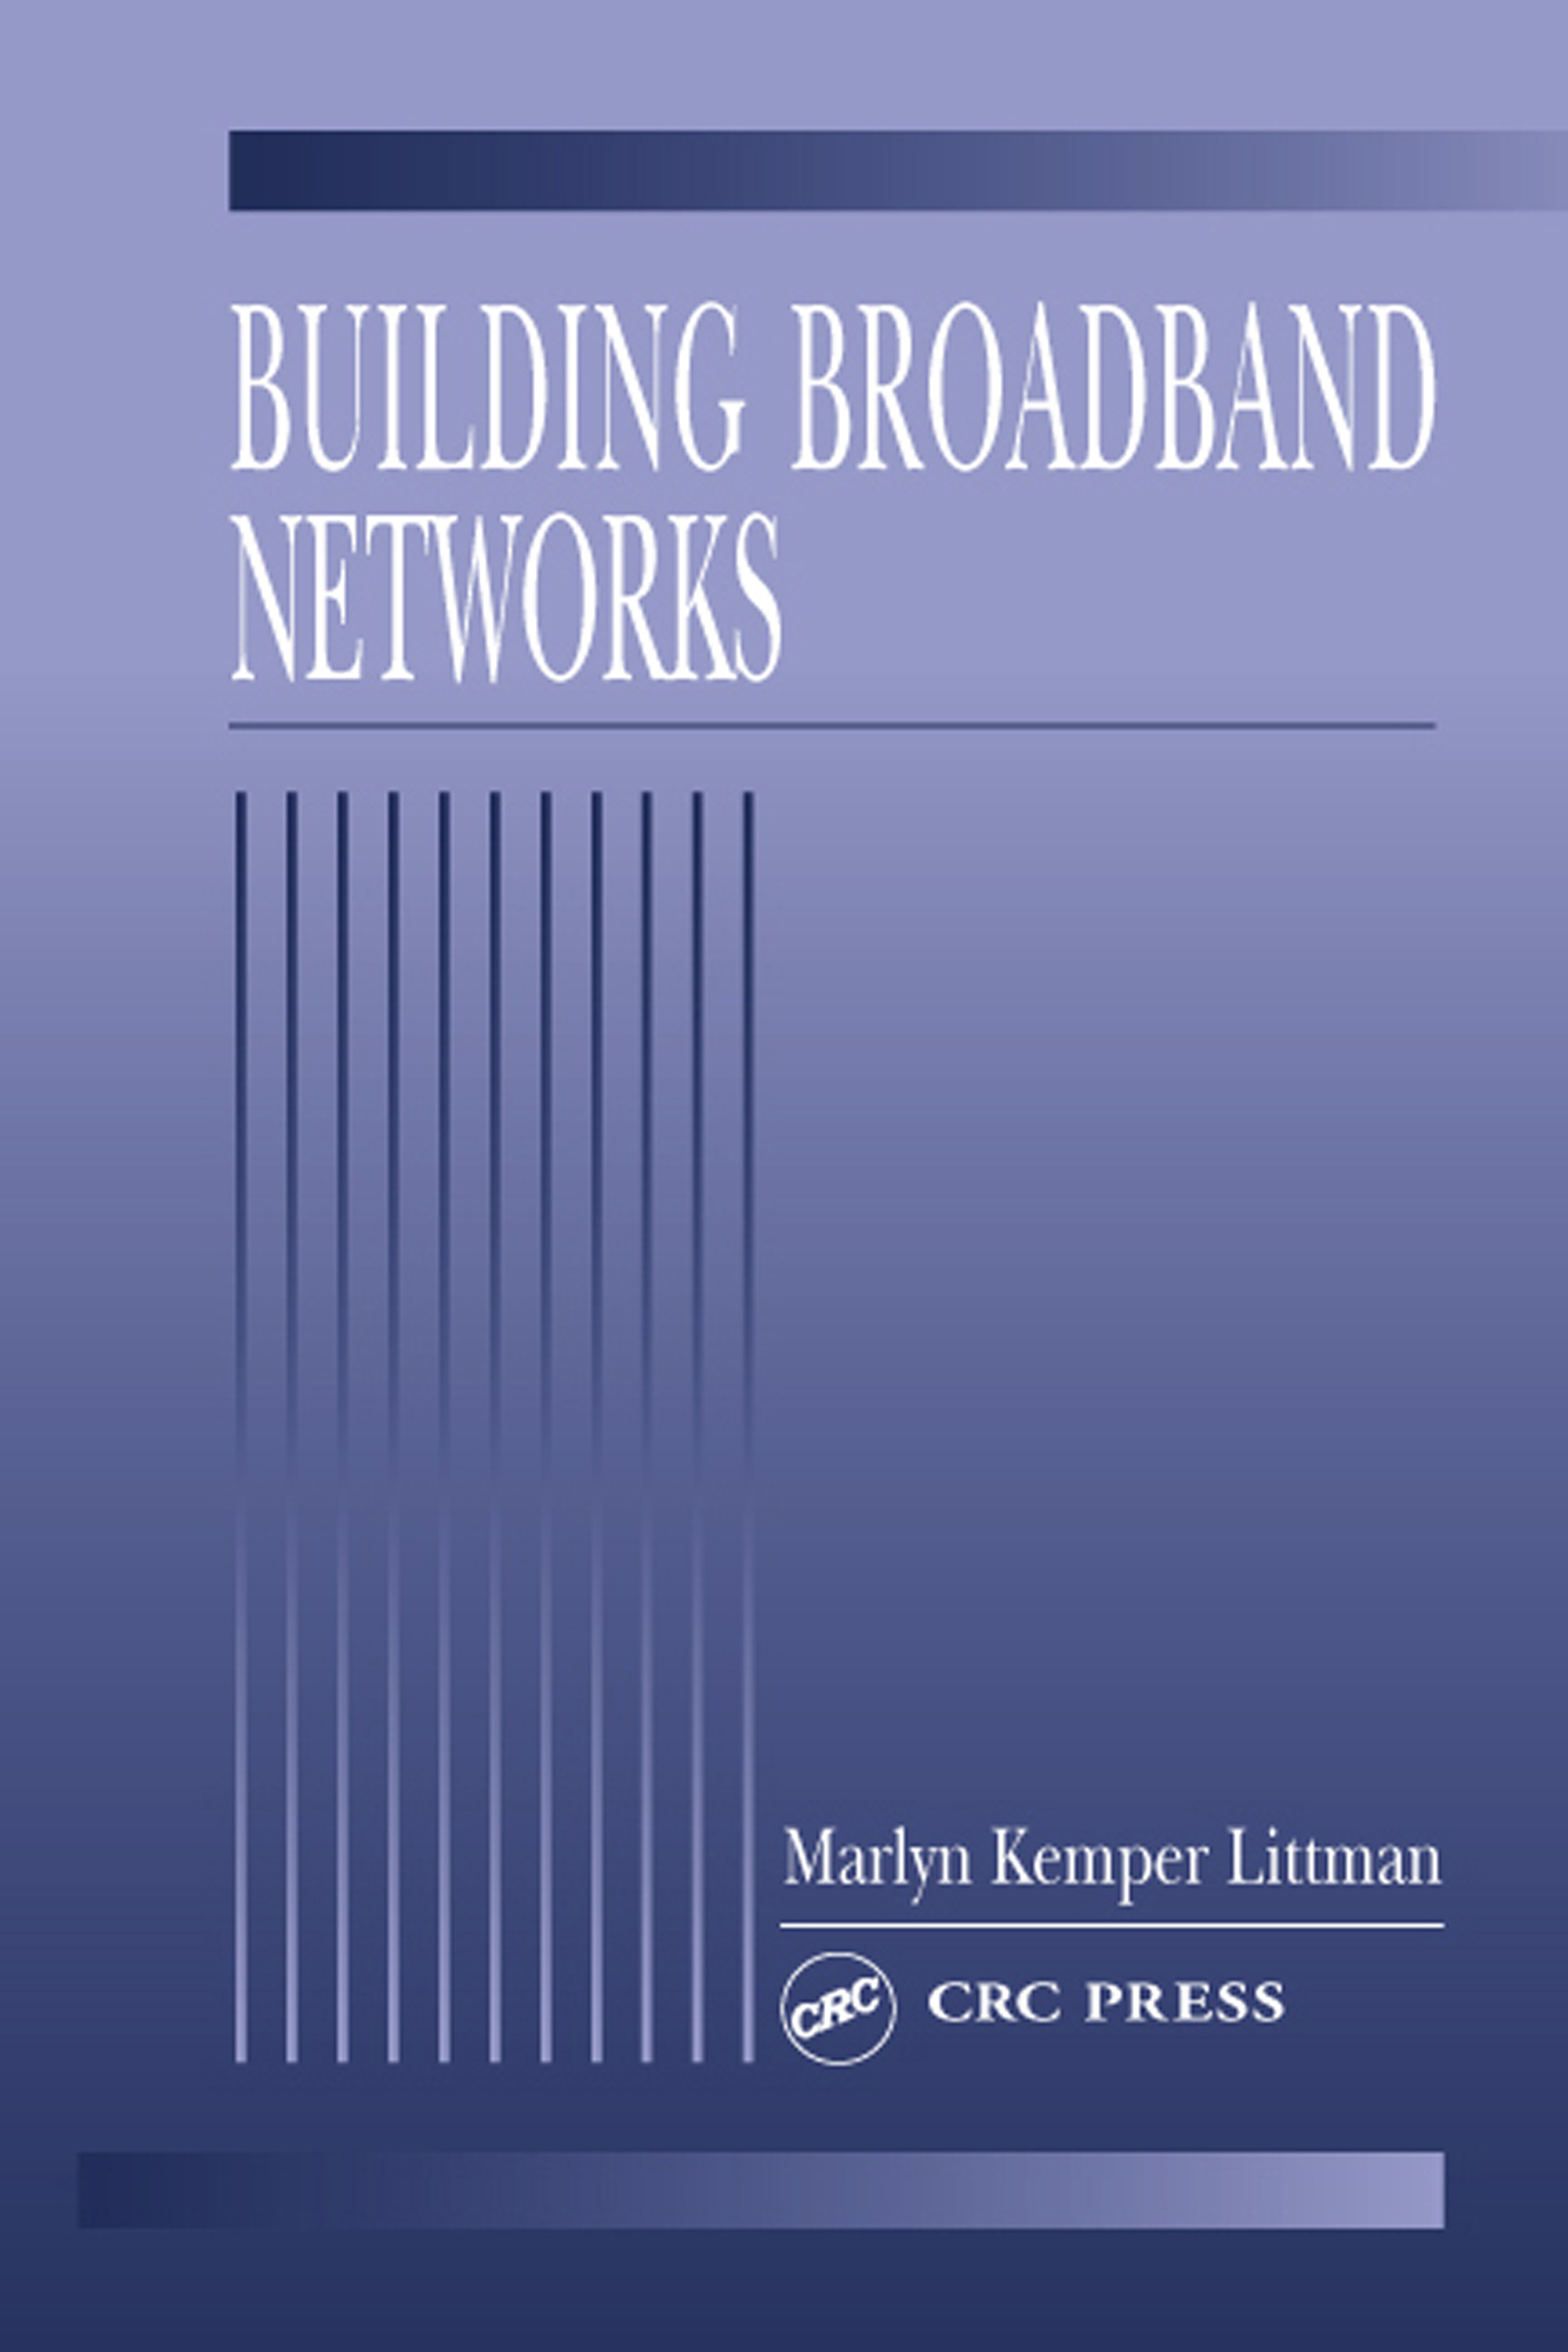 ISBN 9781420000016 product image for Building Broadband Networks | upcitemdb.com